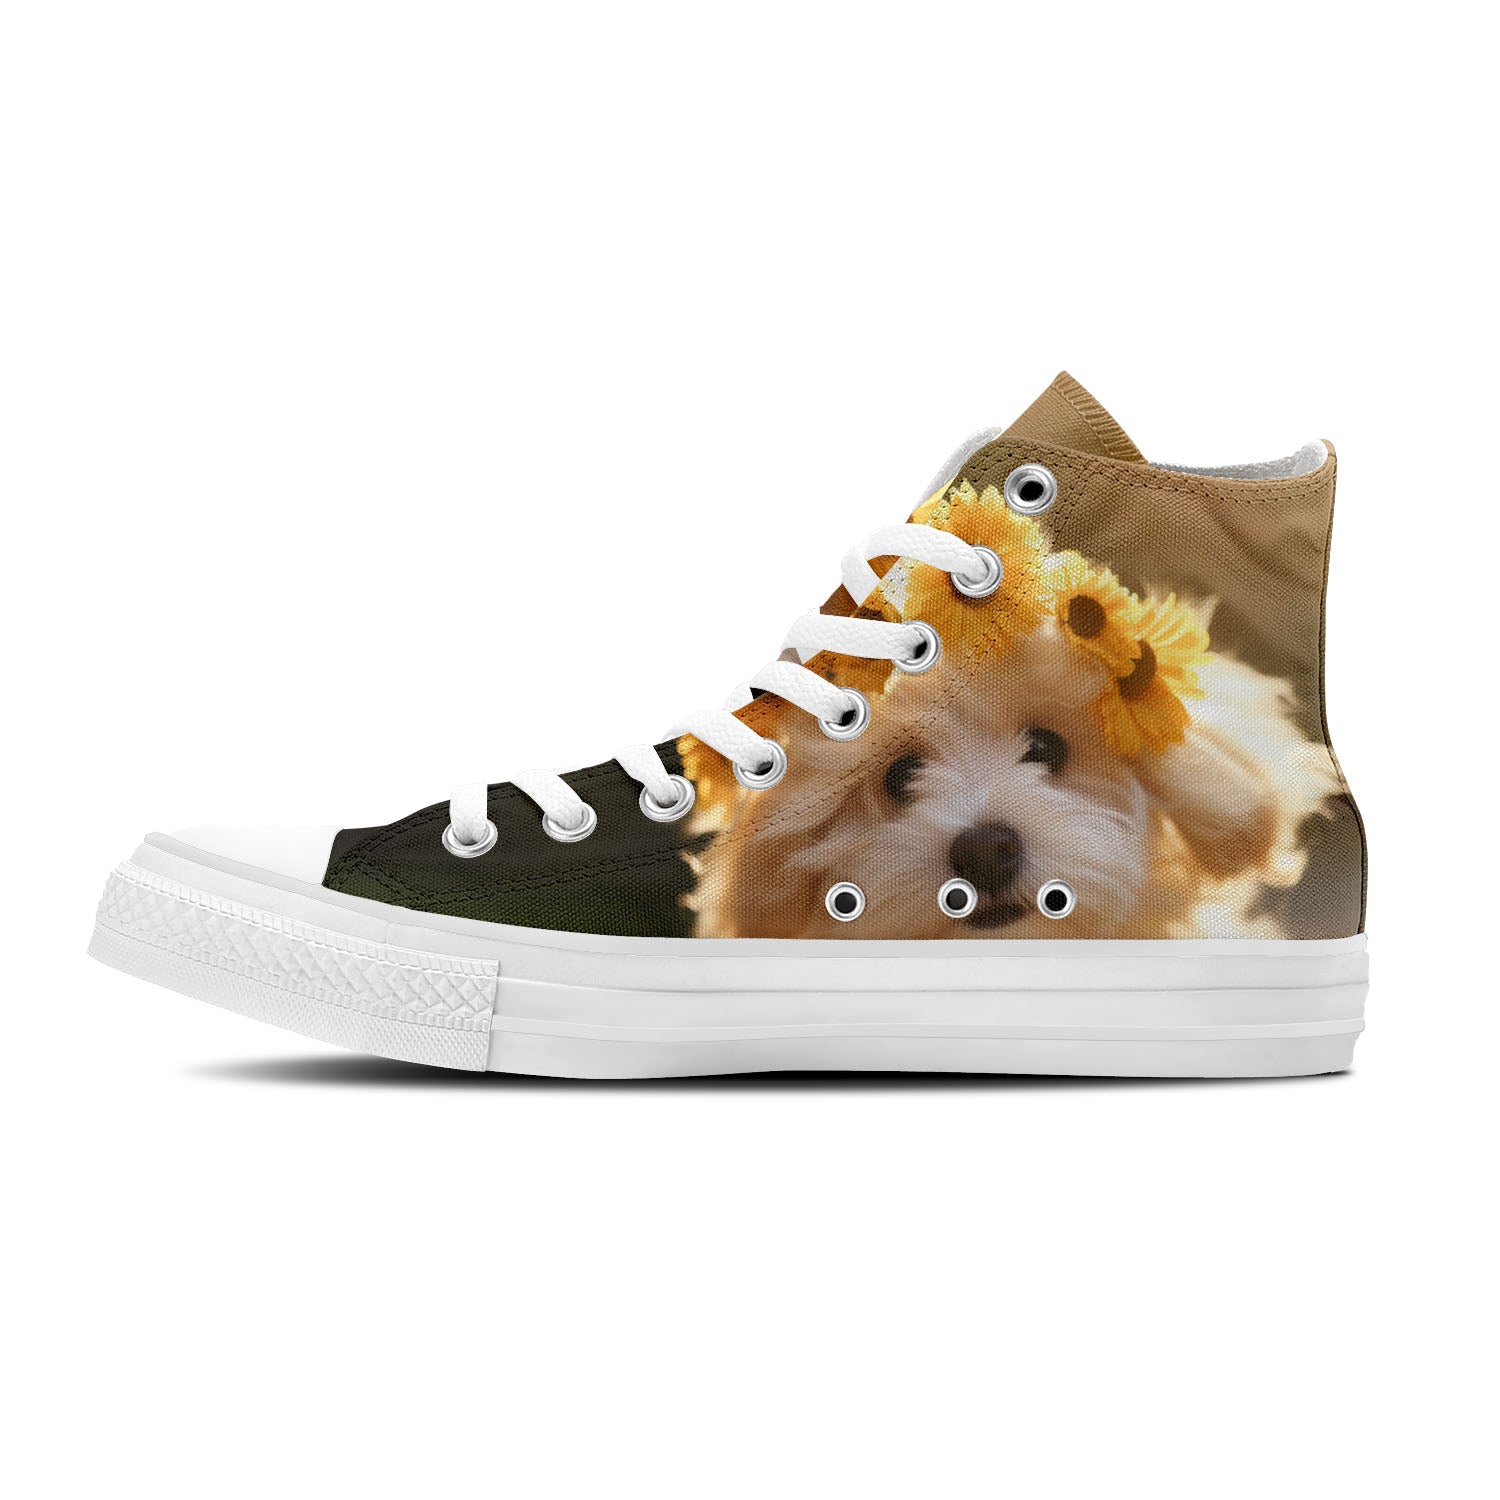 Schicker Hundestil: Mid-Top Canvas-Schuhe mit Blumen gekrönten Welpen